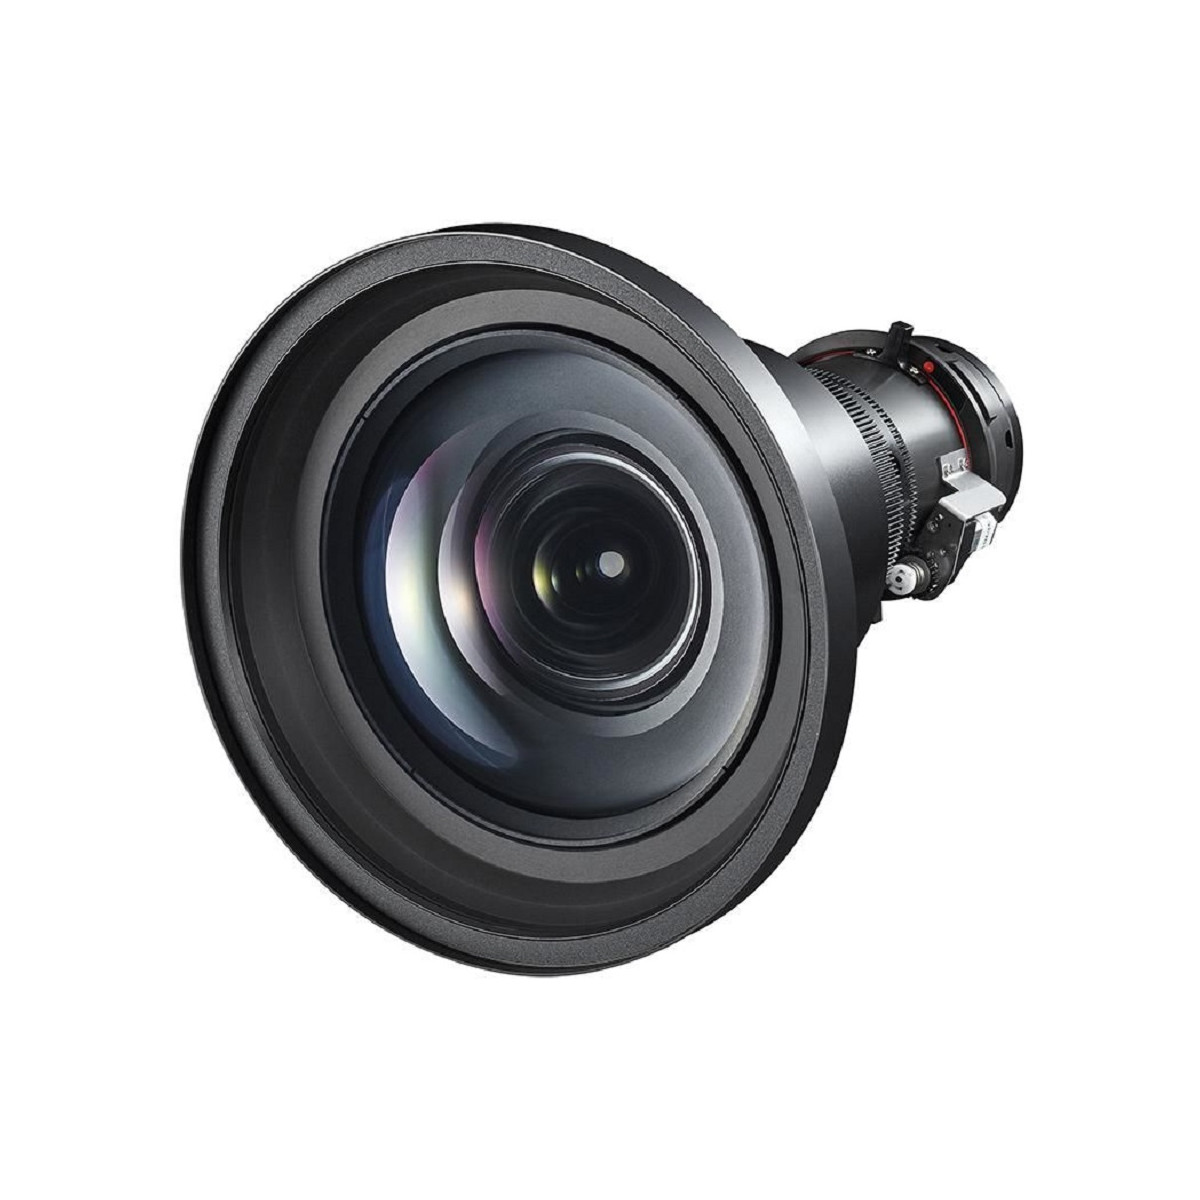 Óptica 1DLP Lens. Tipo 0,6-0,81.